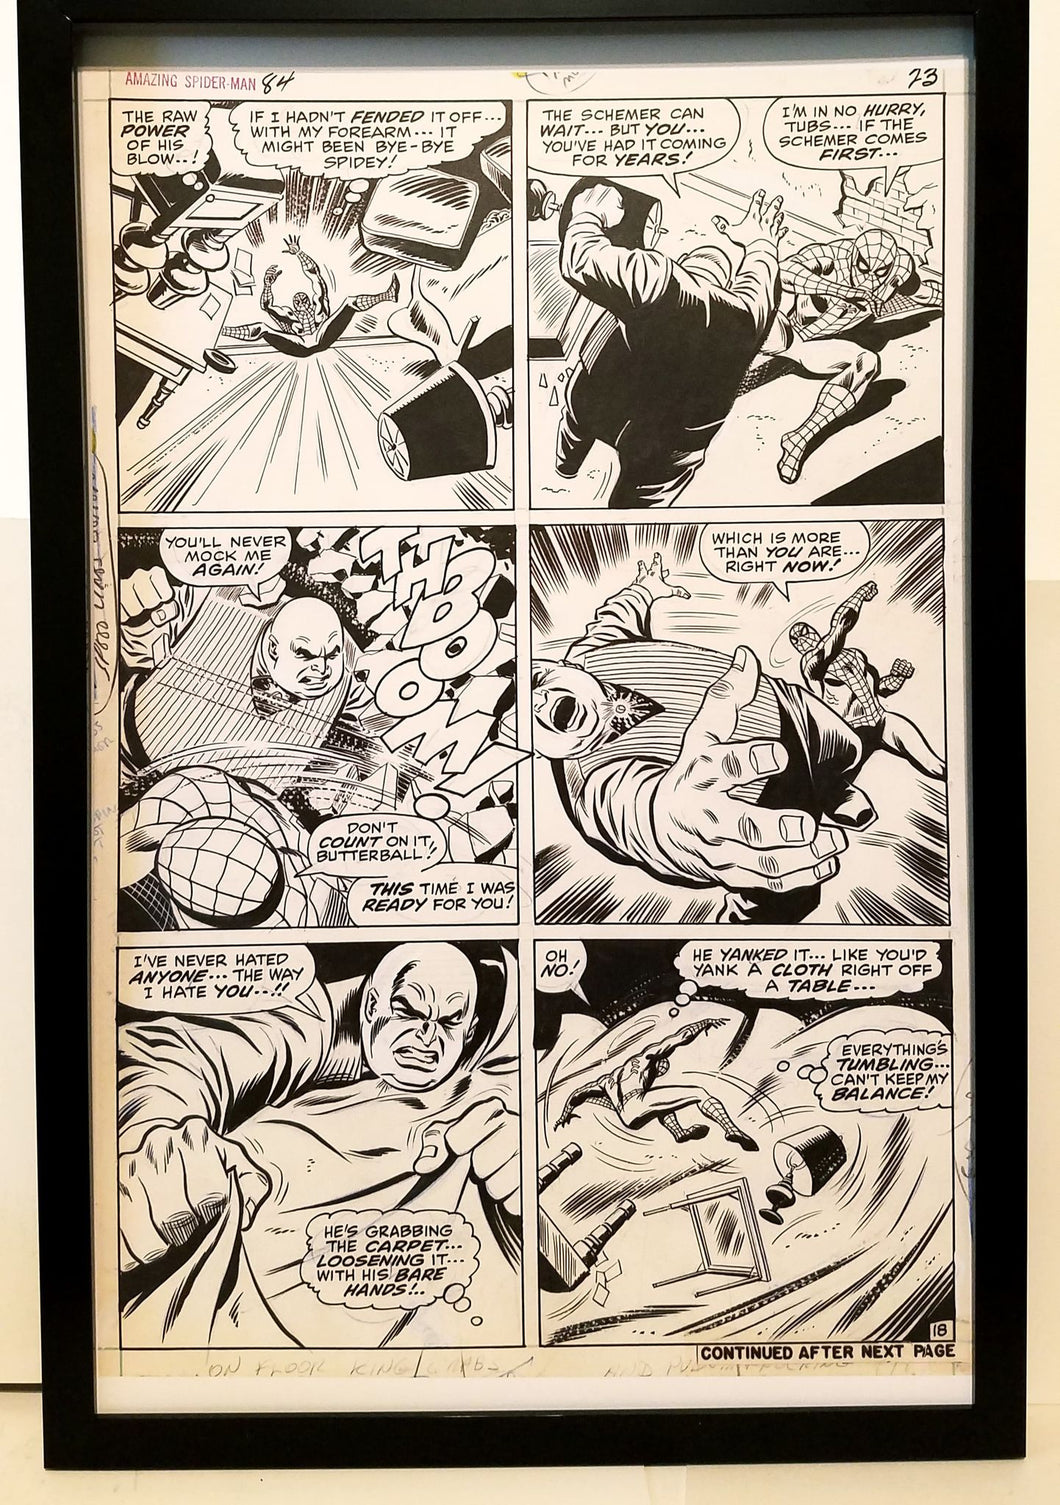 Amazing Spider-Man #84 pg. 18 11x17 FRAMED Original Art Poster Marvel Comics